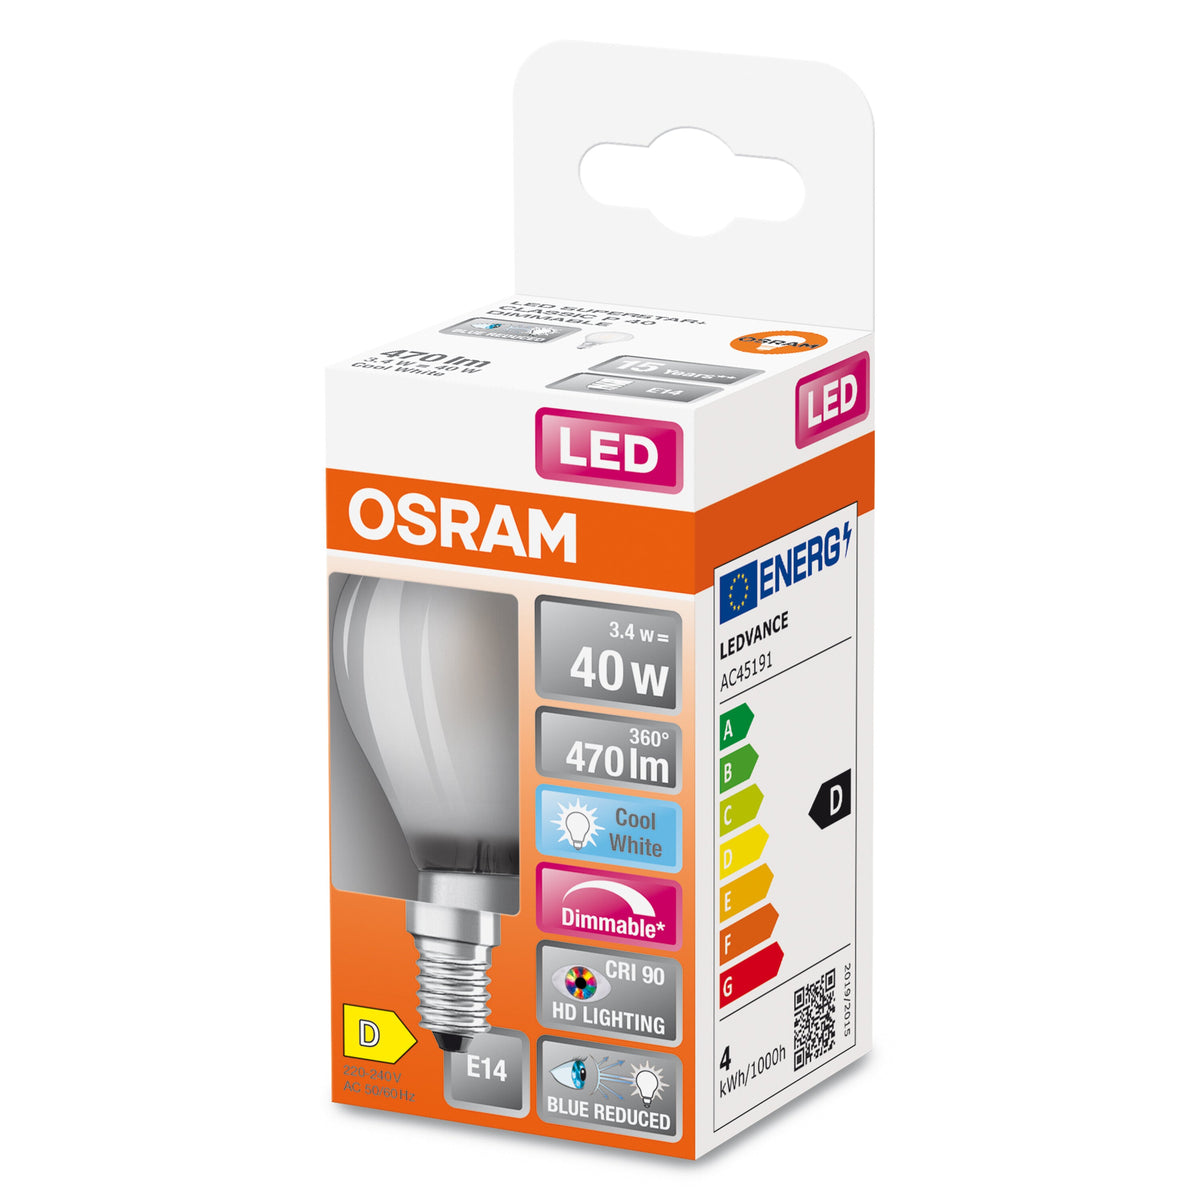 OSRAM FILAMENT LED-Lampe LED SUPERSTAR+ CL Edison FIL 60 dim 5,8W/927 E14 CRI90 BOX